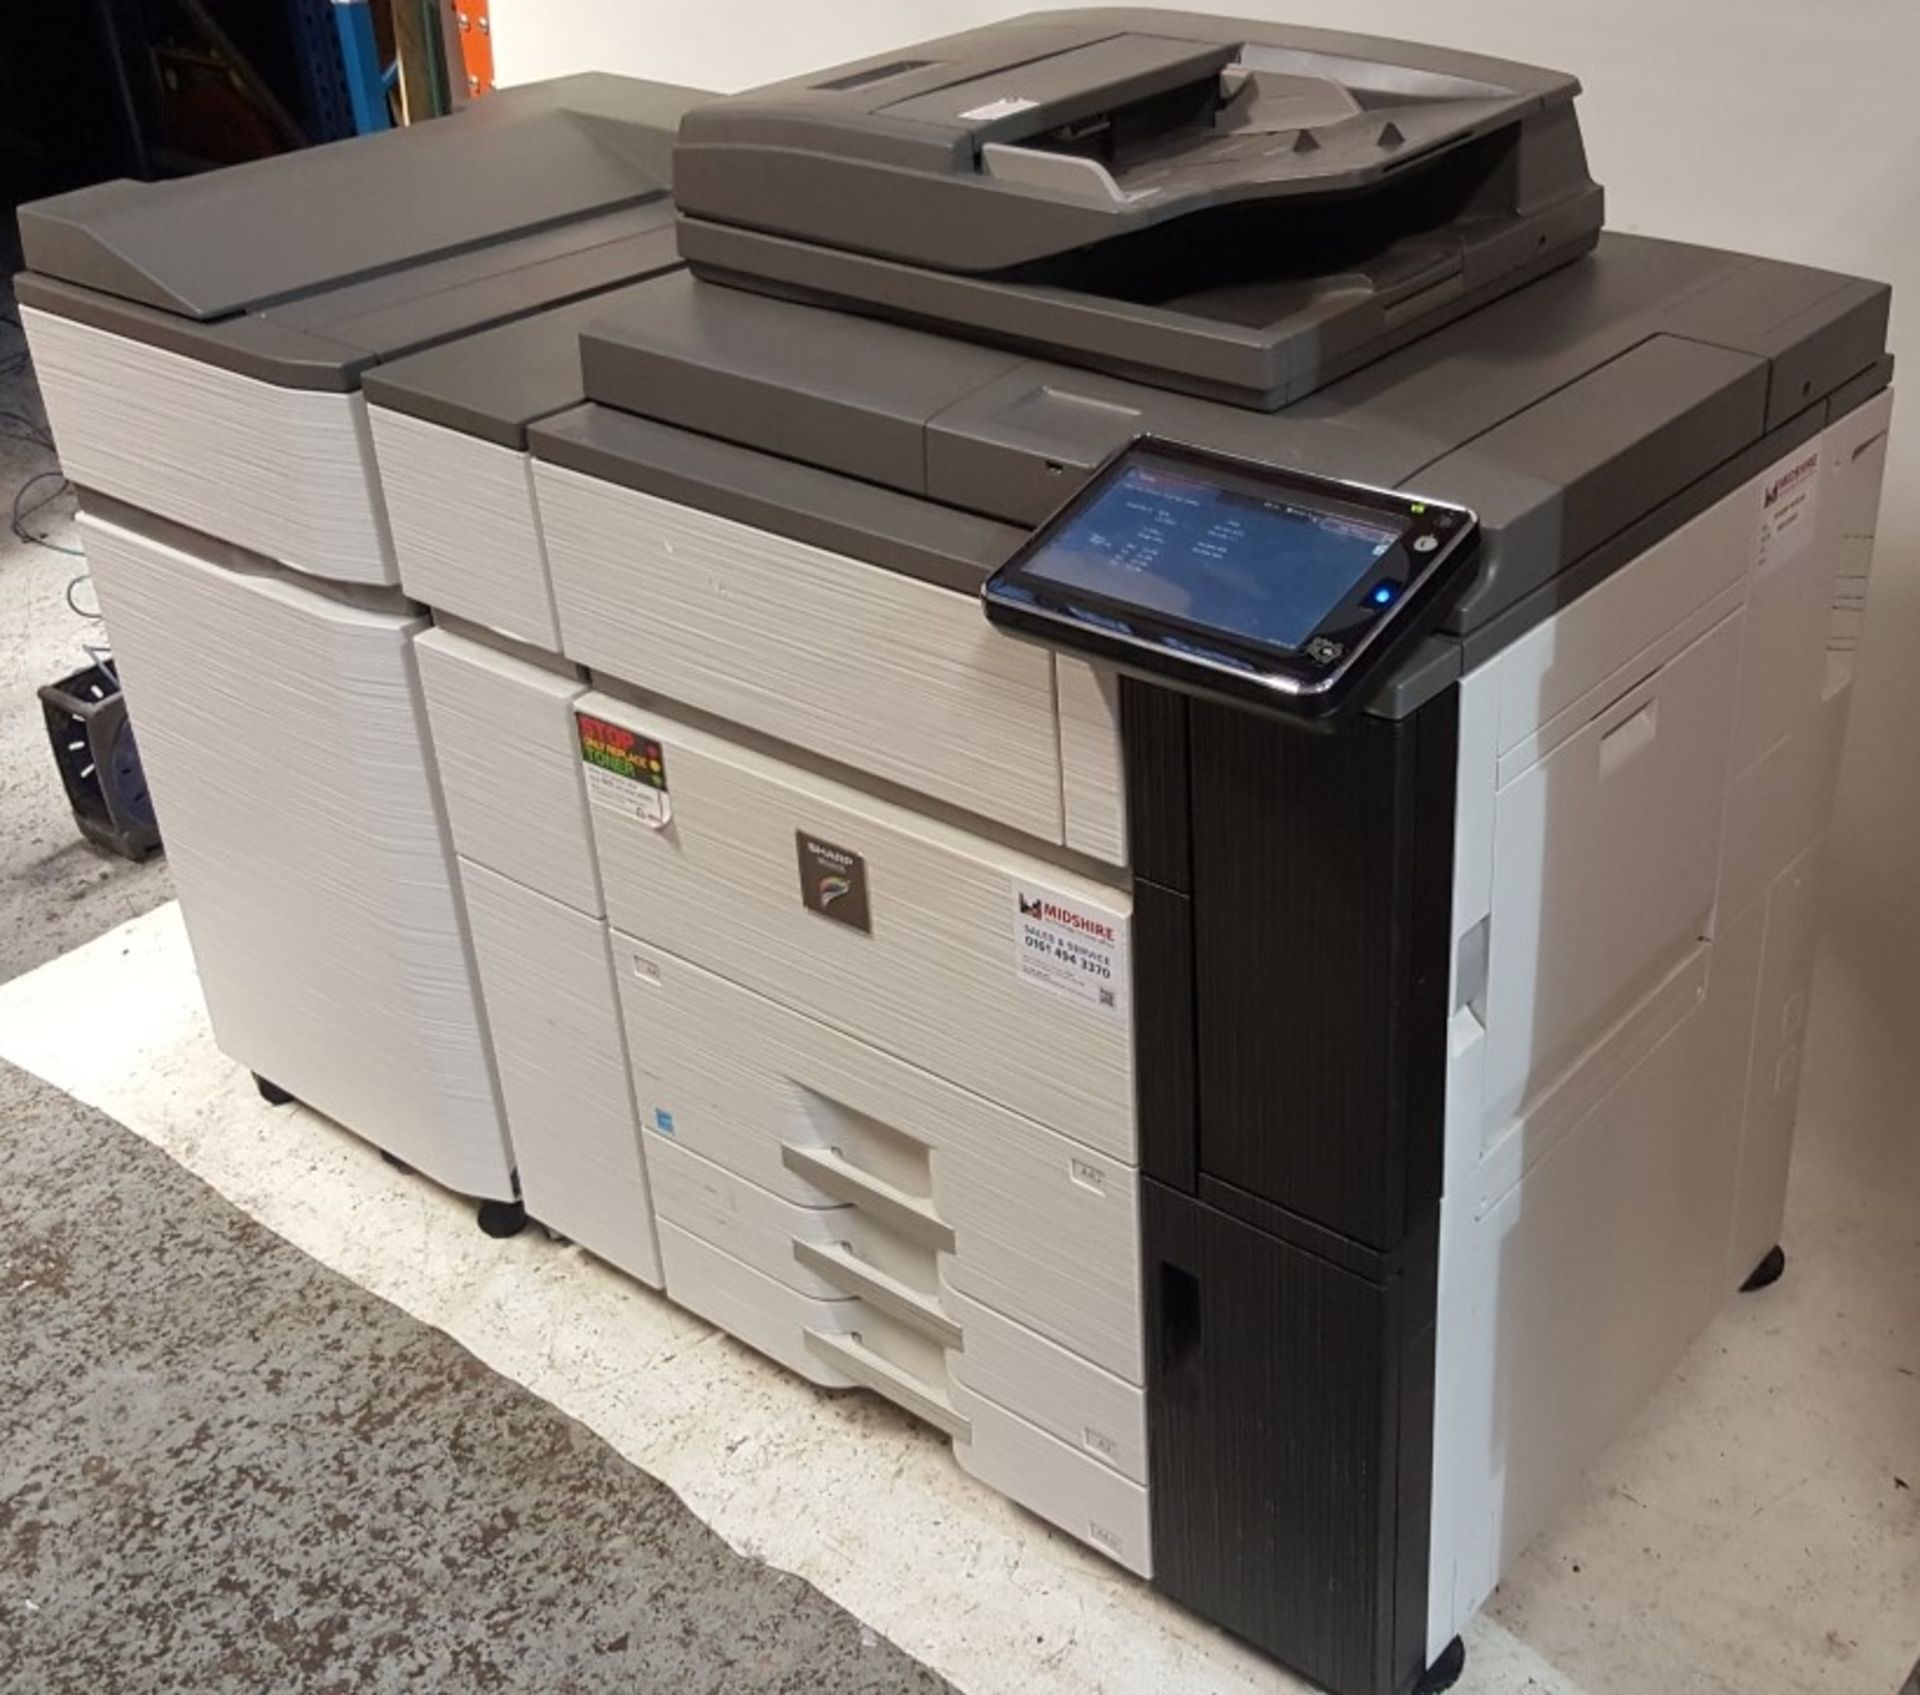 1 x Sharp MX6240N Office Photocopier Printer With Saddle Stitch Finisher & Curl Correction Unit - - Image 7 of 9